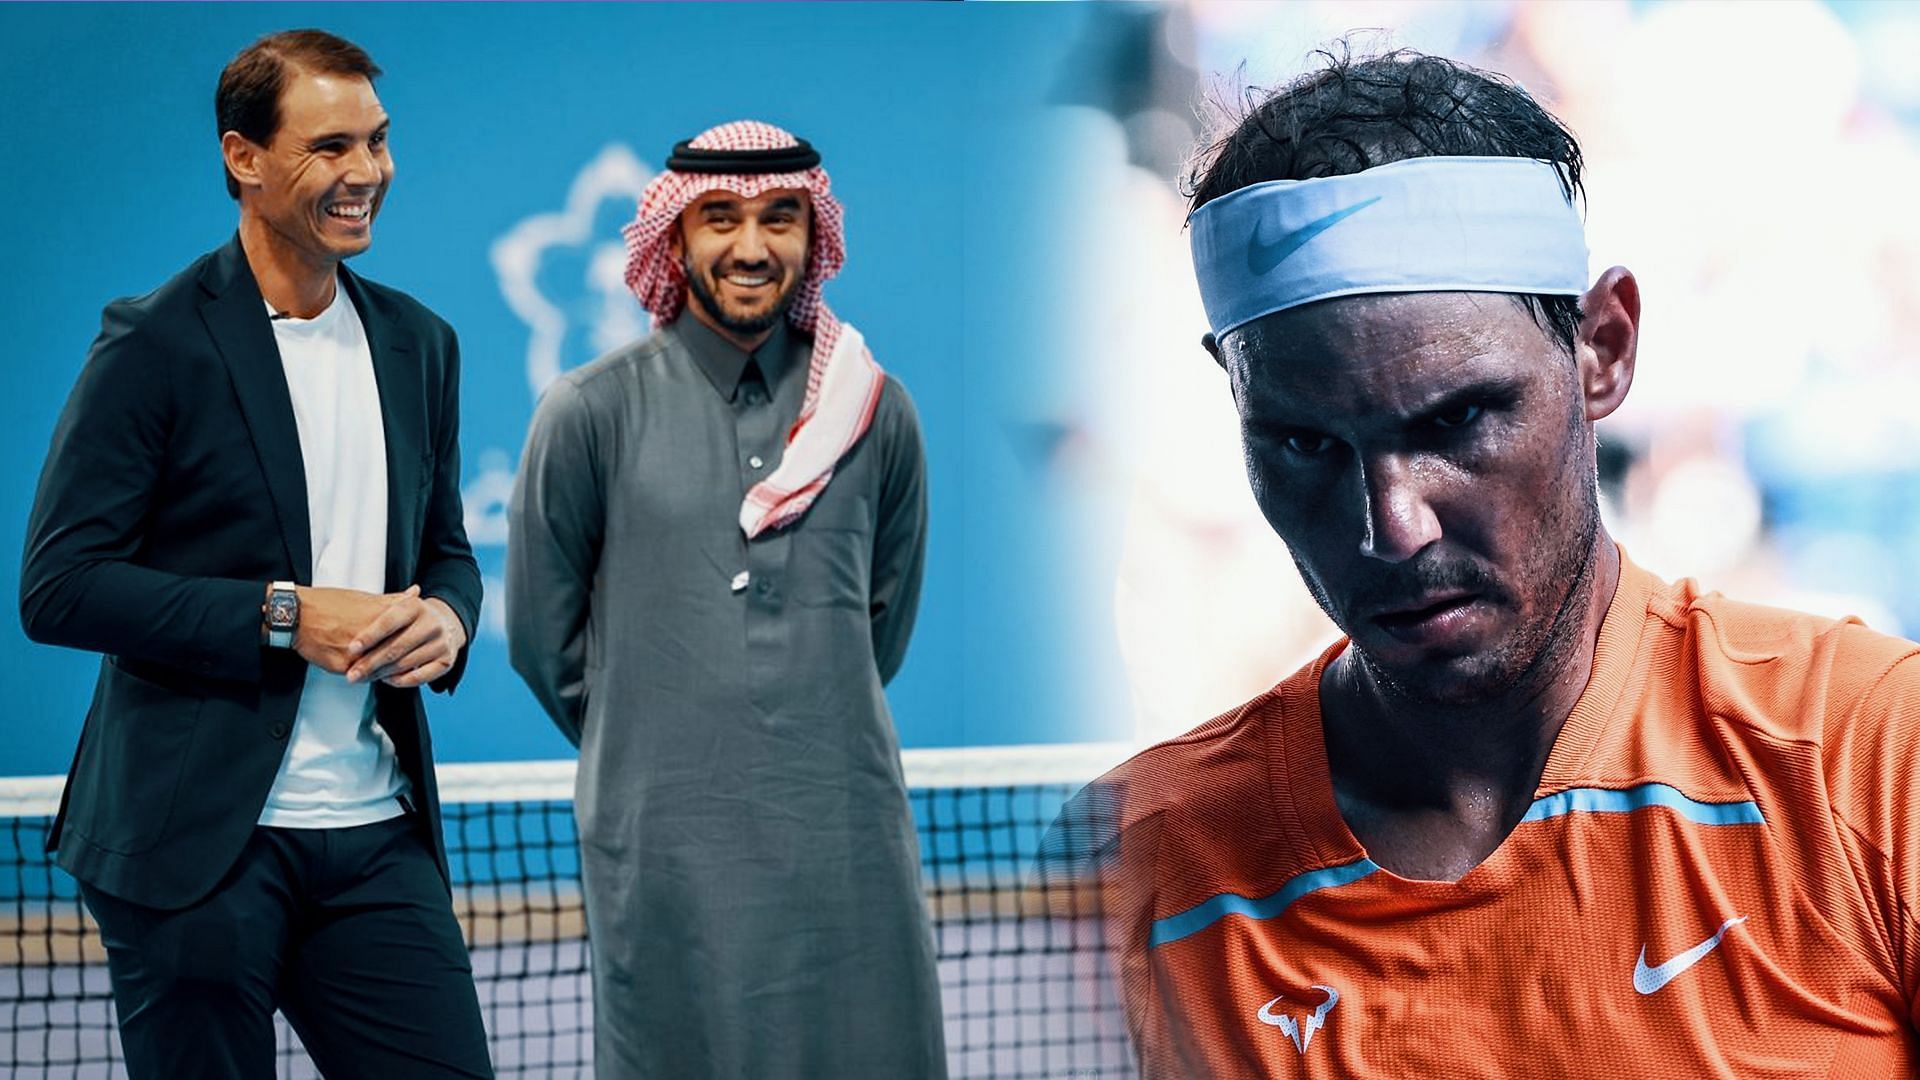 Rafael Nadal has been named as the ambassador for the Saudi Tennis Federation.